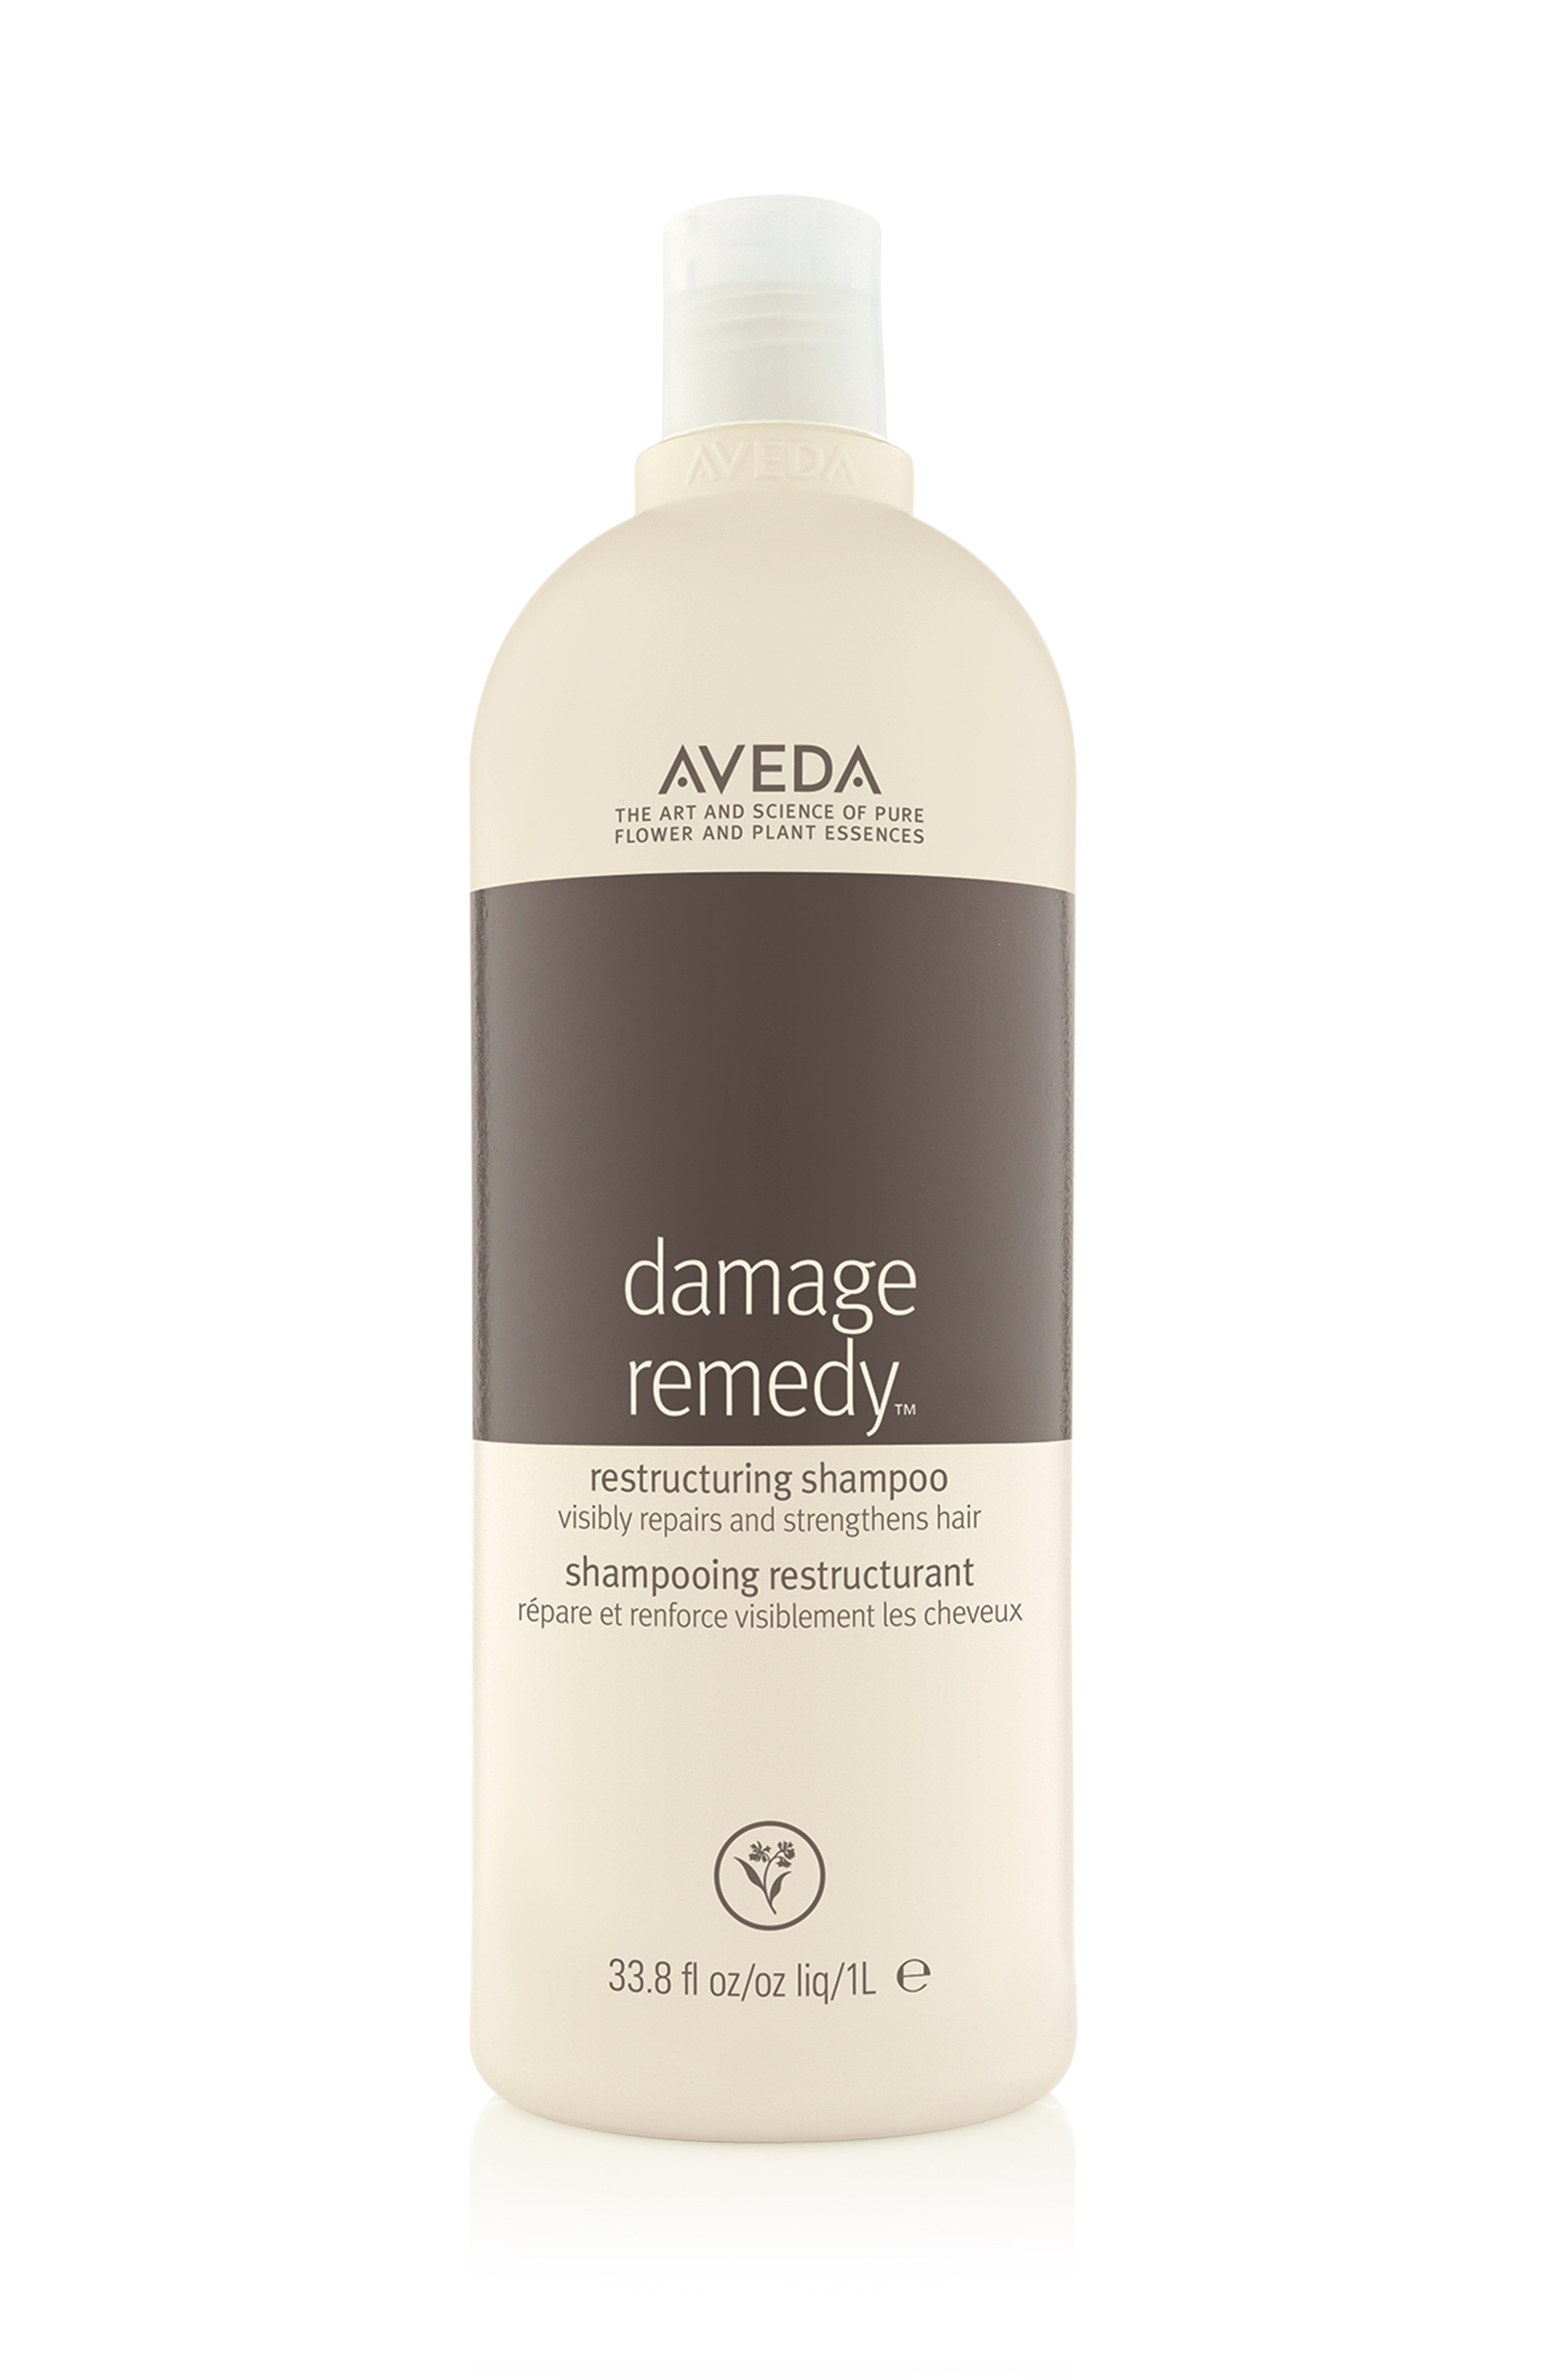 Aveda damage remedy shampoo ristrutturante 1000 ml, Bianco/Marrone, large image number 0